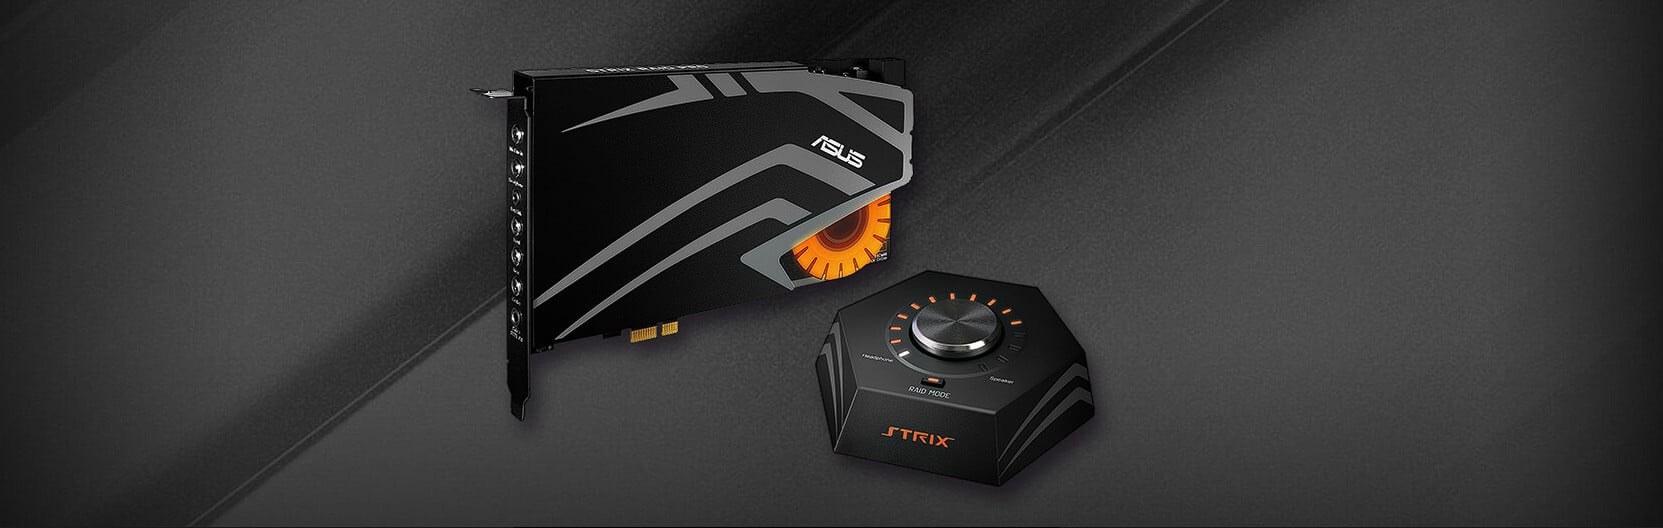 ASUS Strix Raid Pro - 7.1 PCIe Gaming Sound Card